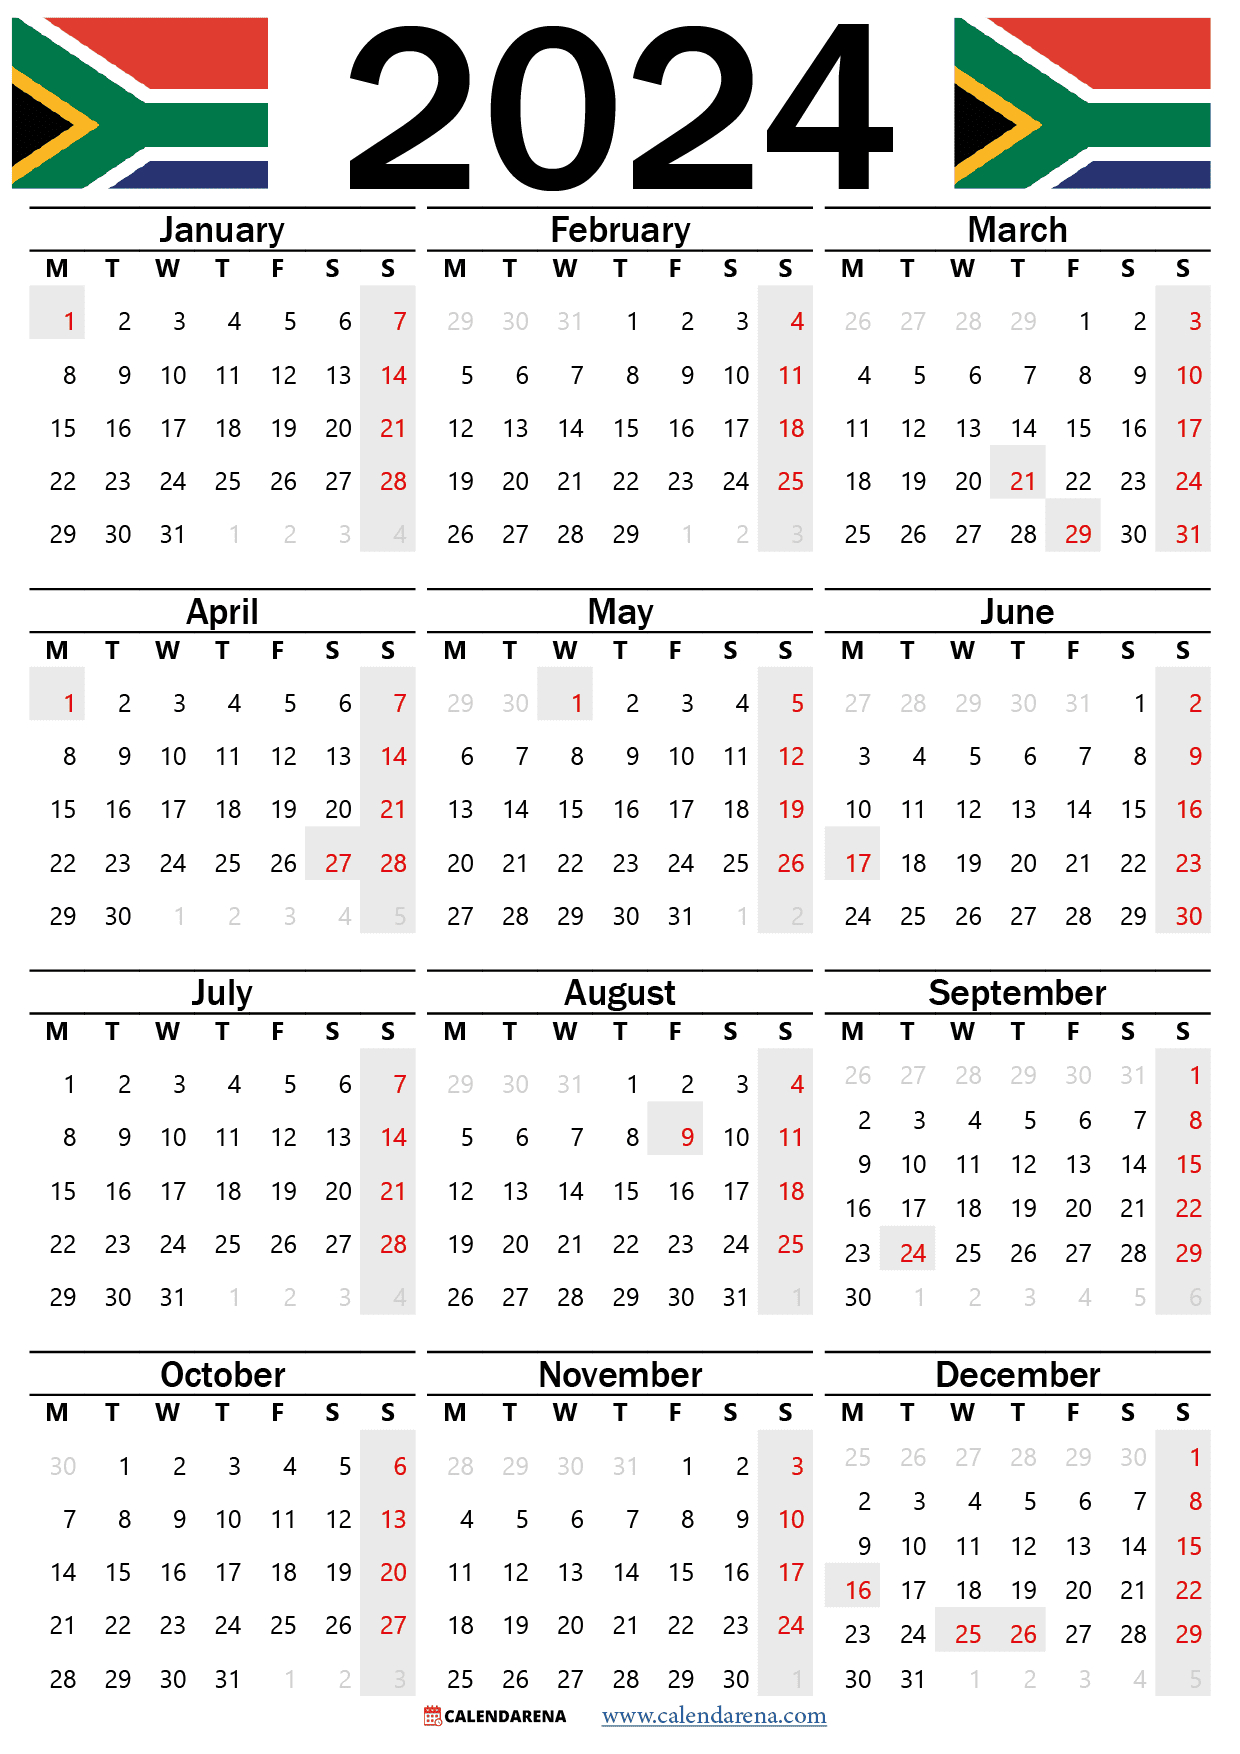 South Africa 2023 Calendar With Holidays Printable | Printable Calendar 2024 With Holidays South Africa